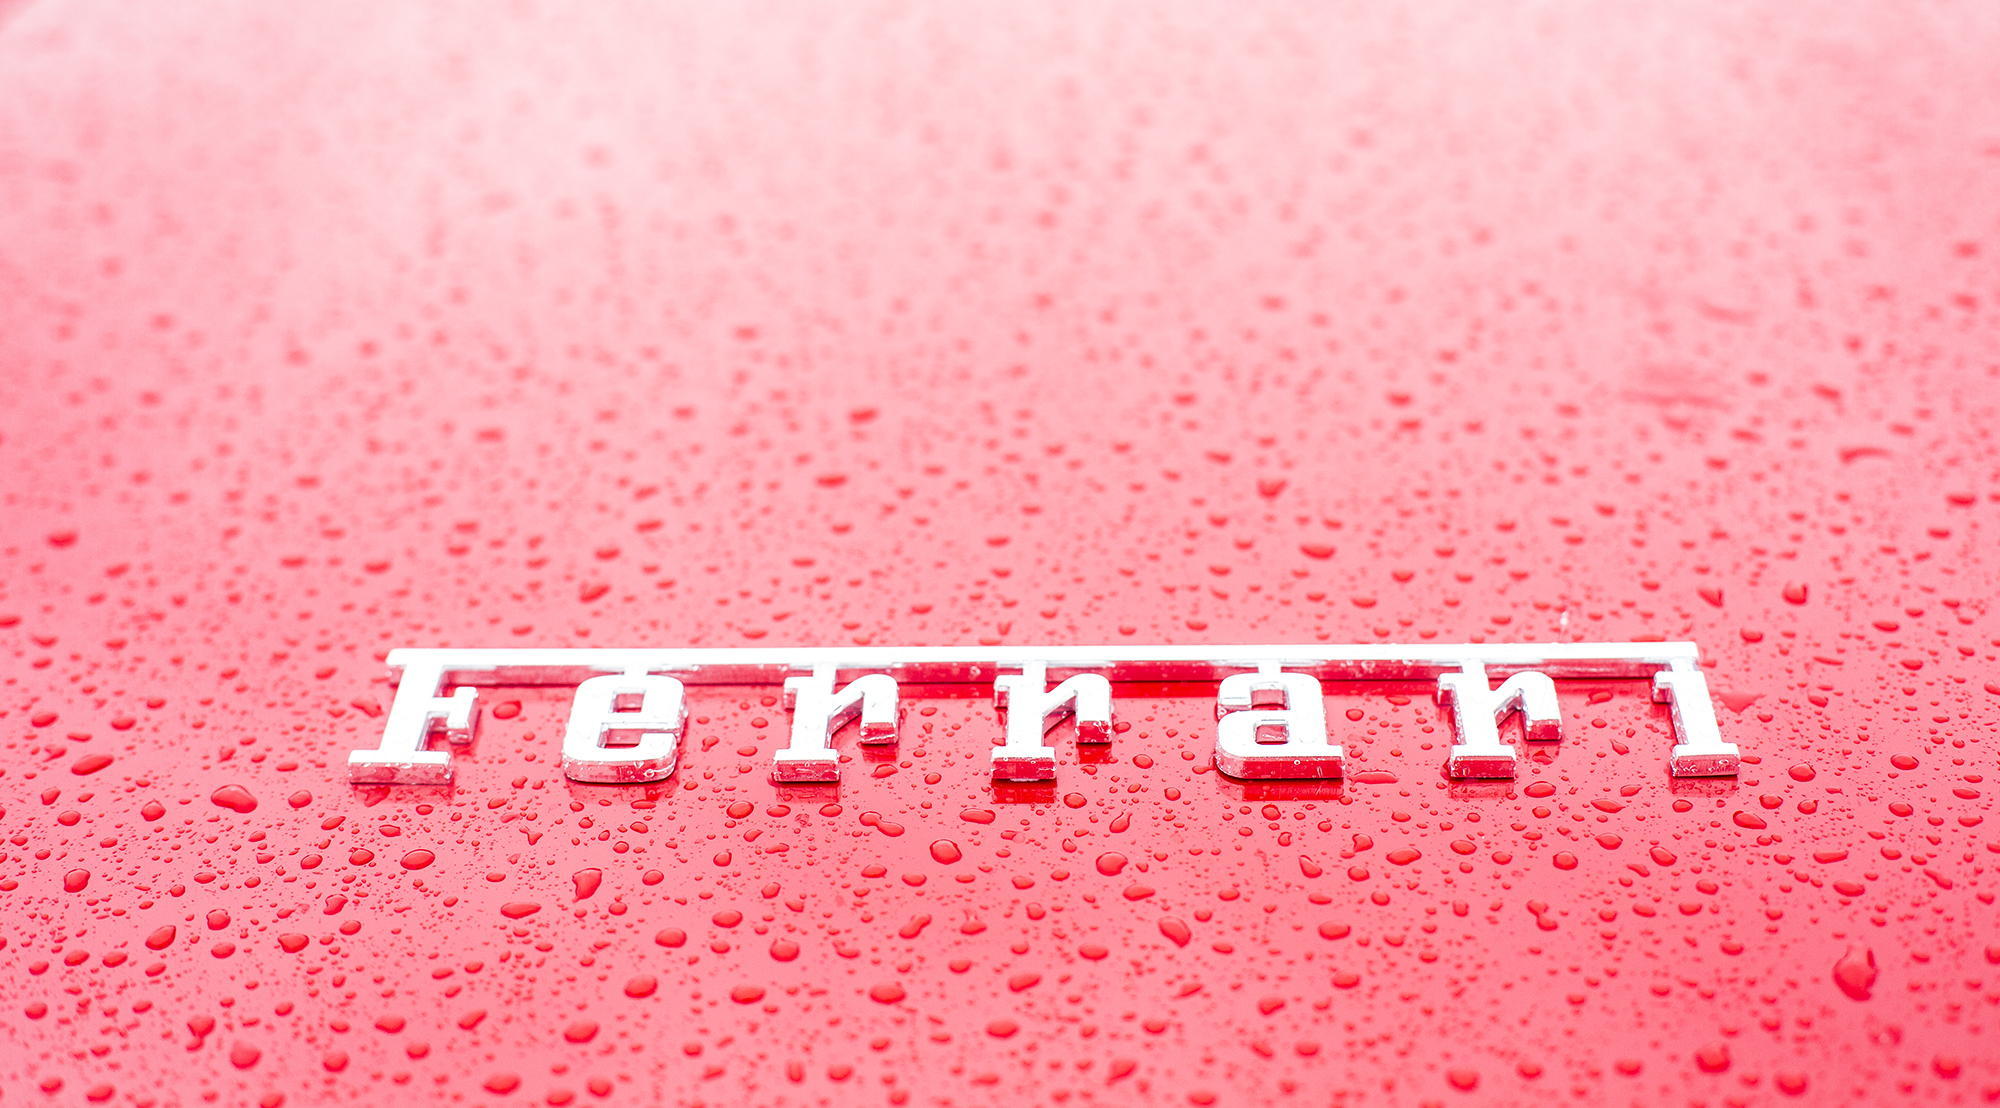 100162 Ferrari Testarossa, retrowave, 4K, pink - Rare Gallery HD Wallpapers